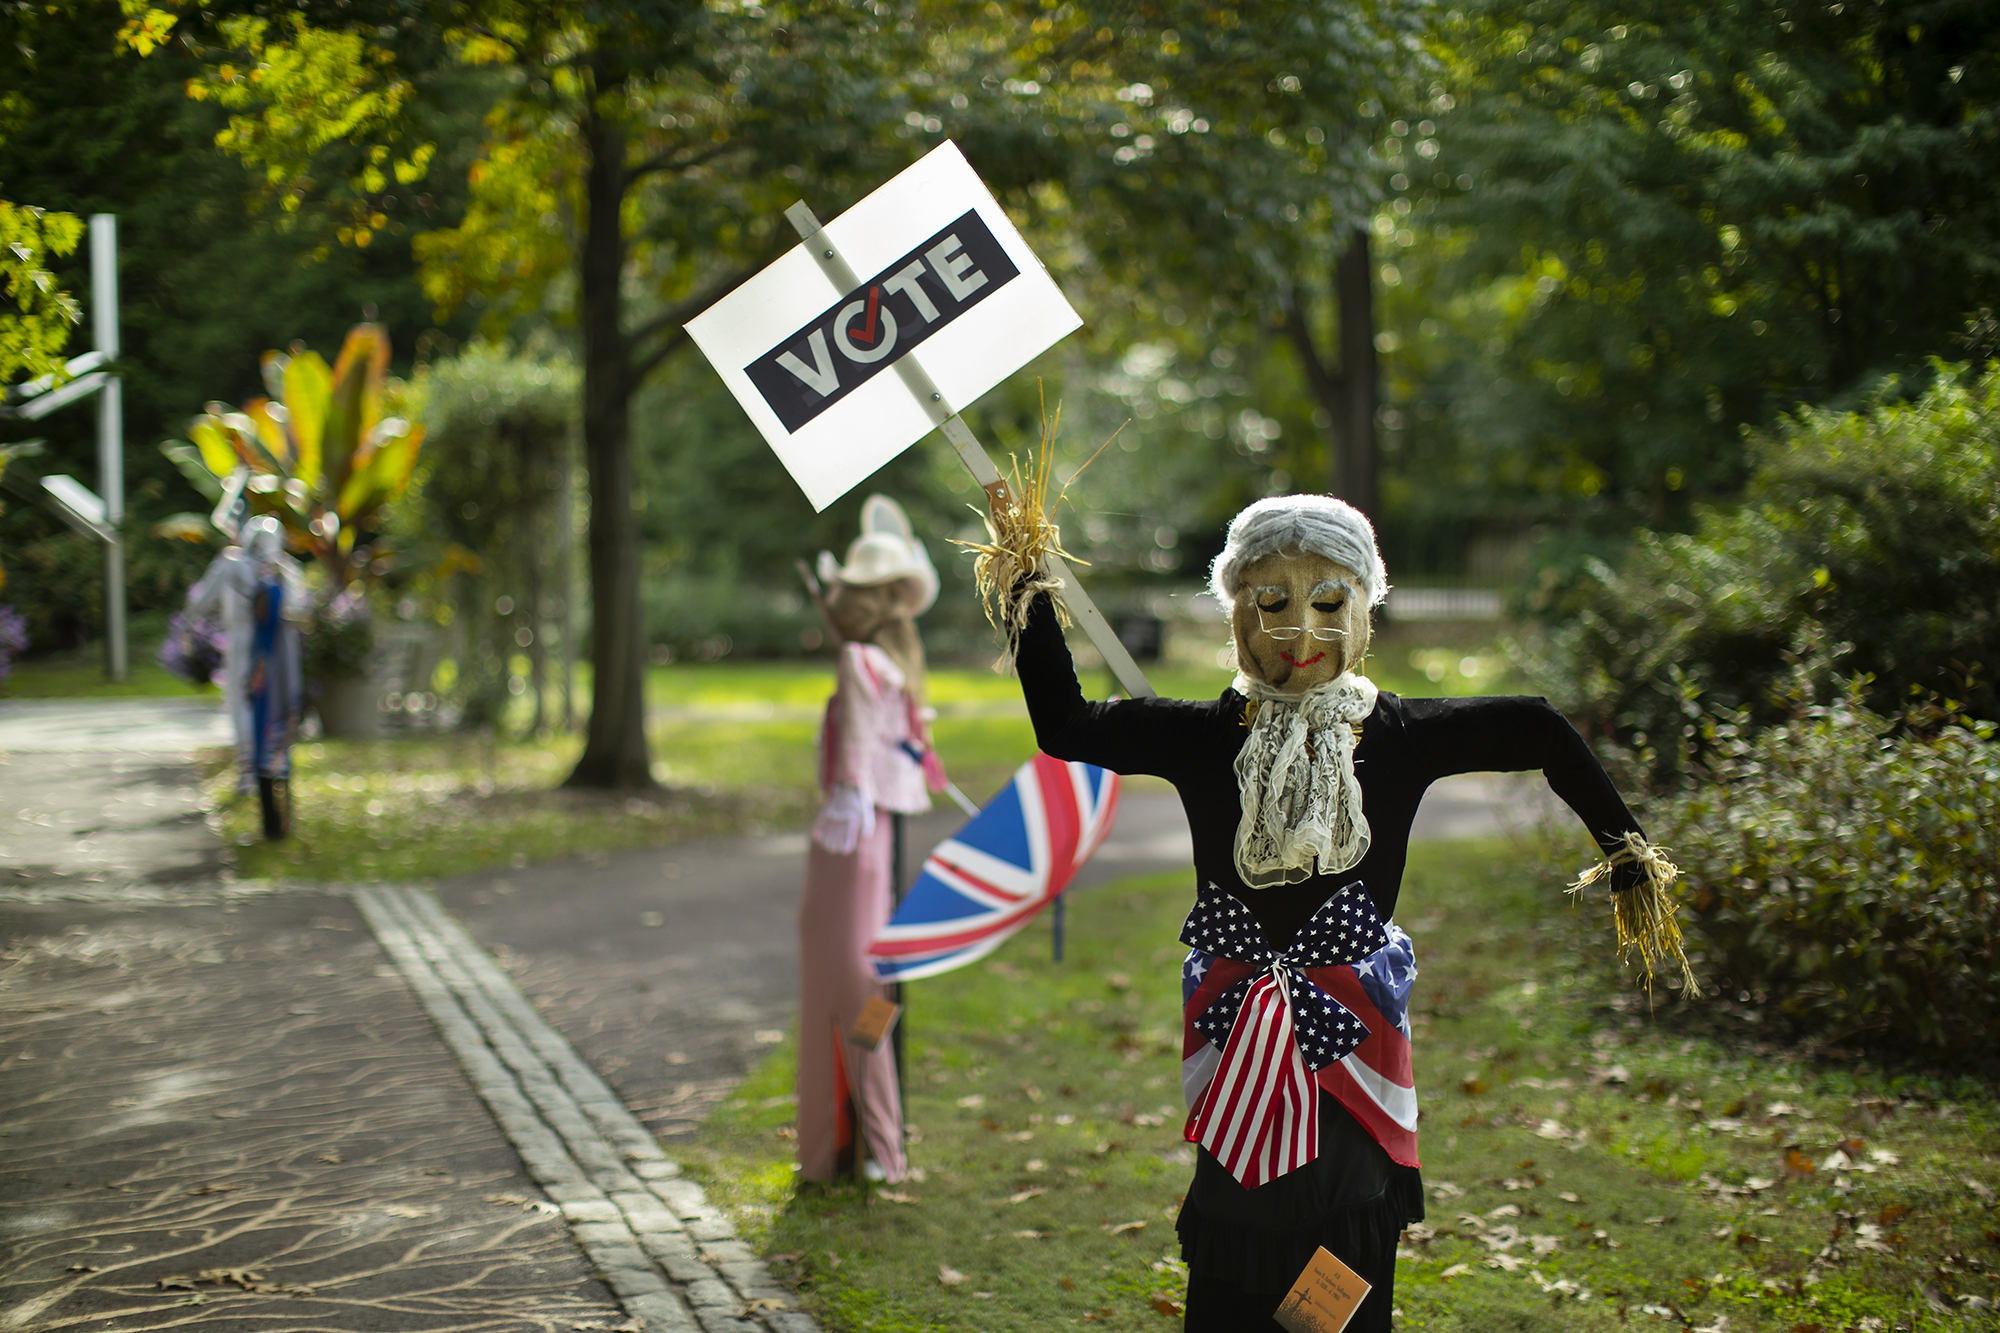 Scarecrow-Holding-Vote-Sign-In-Garden